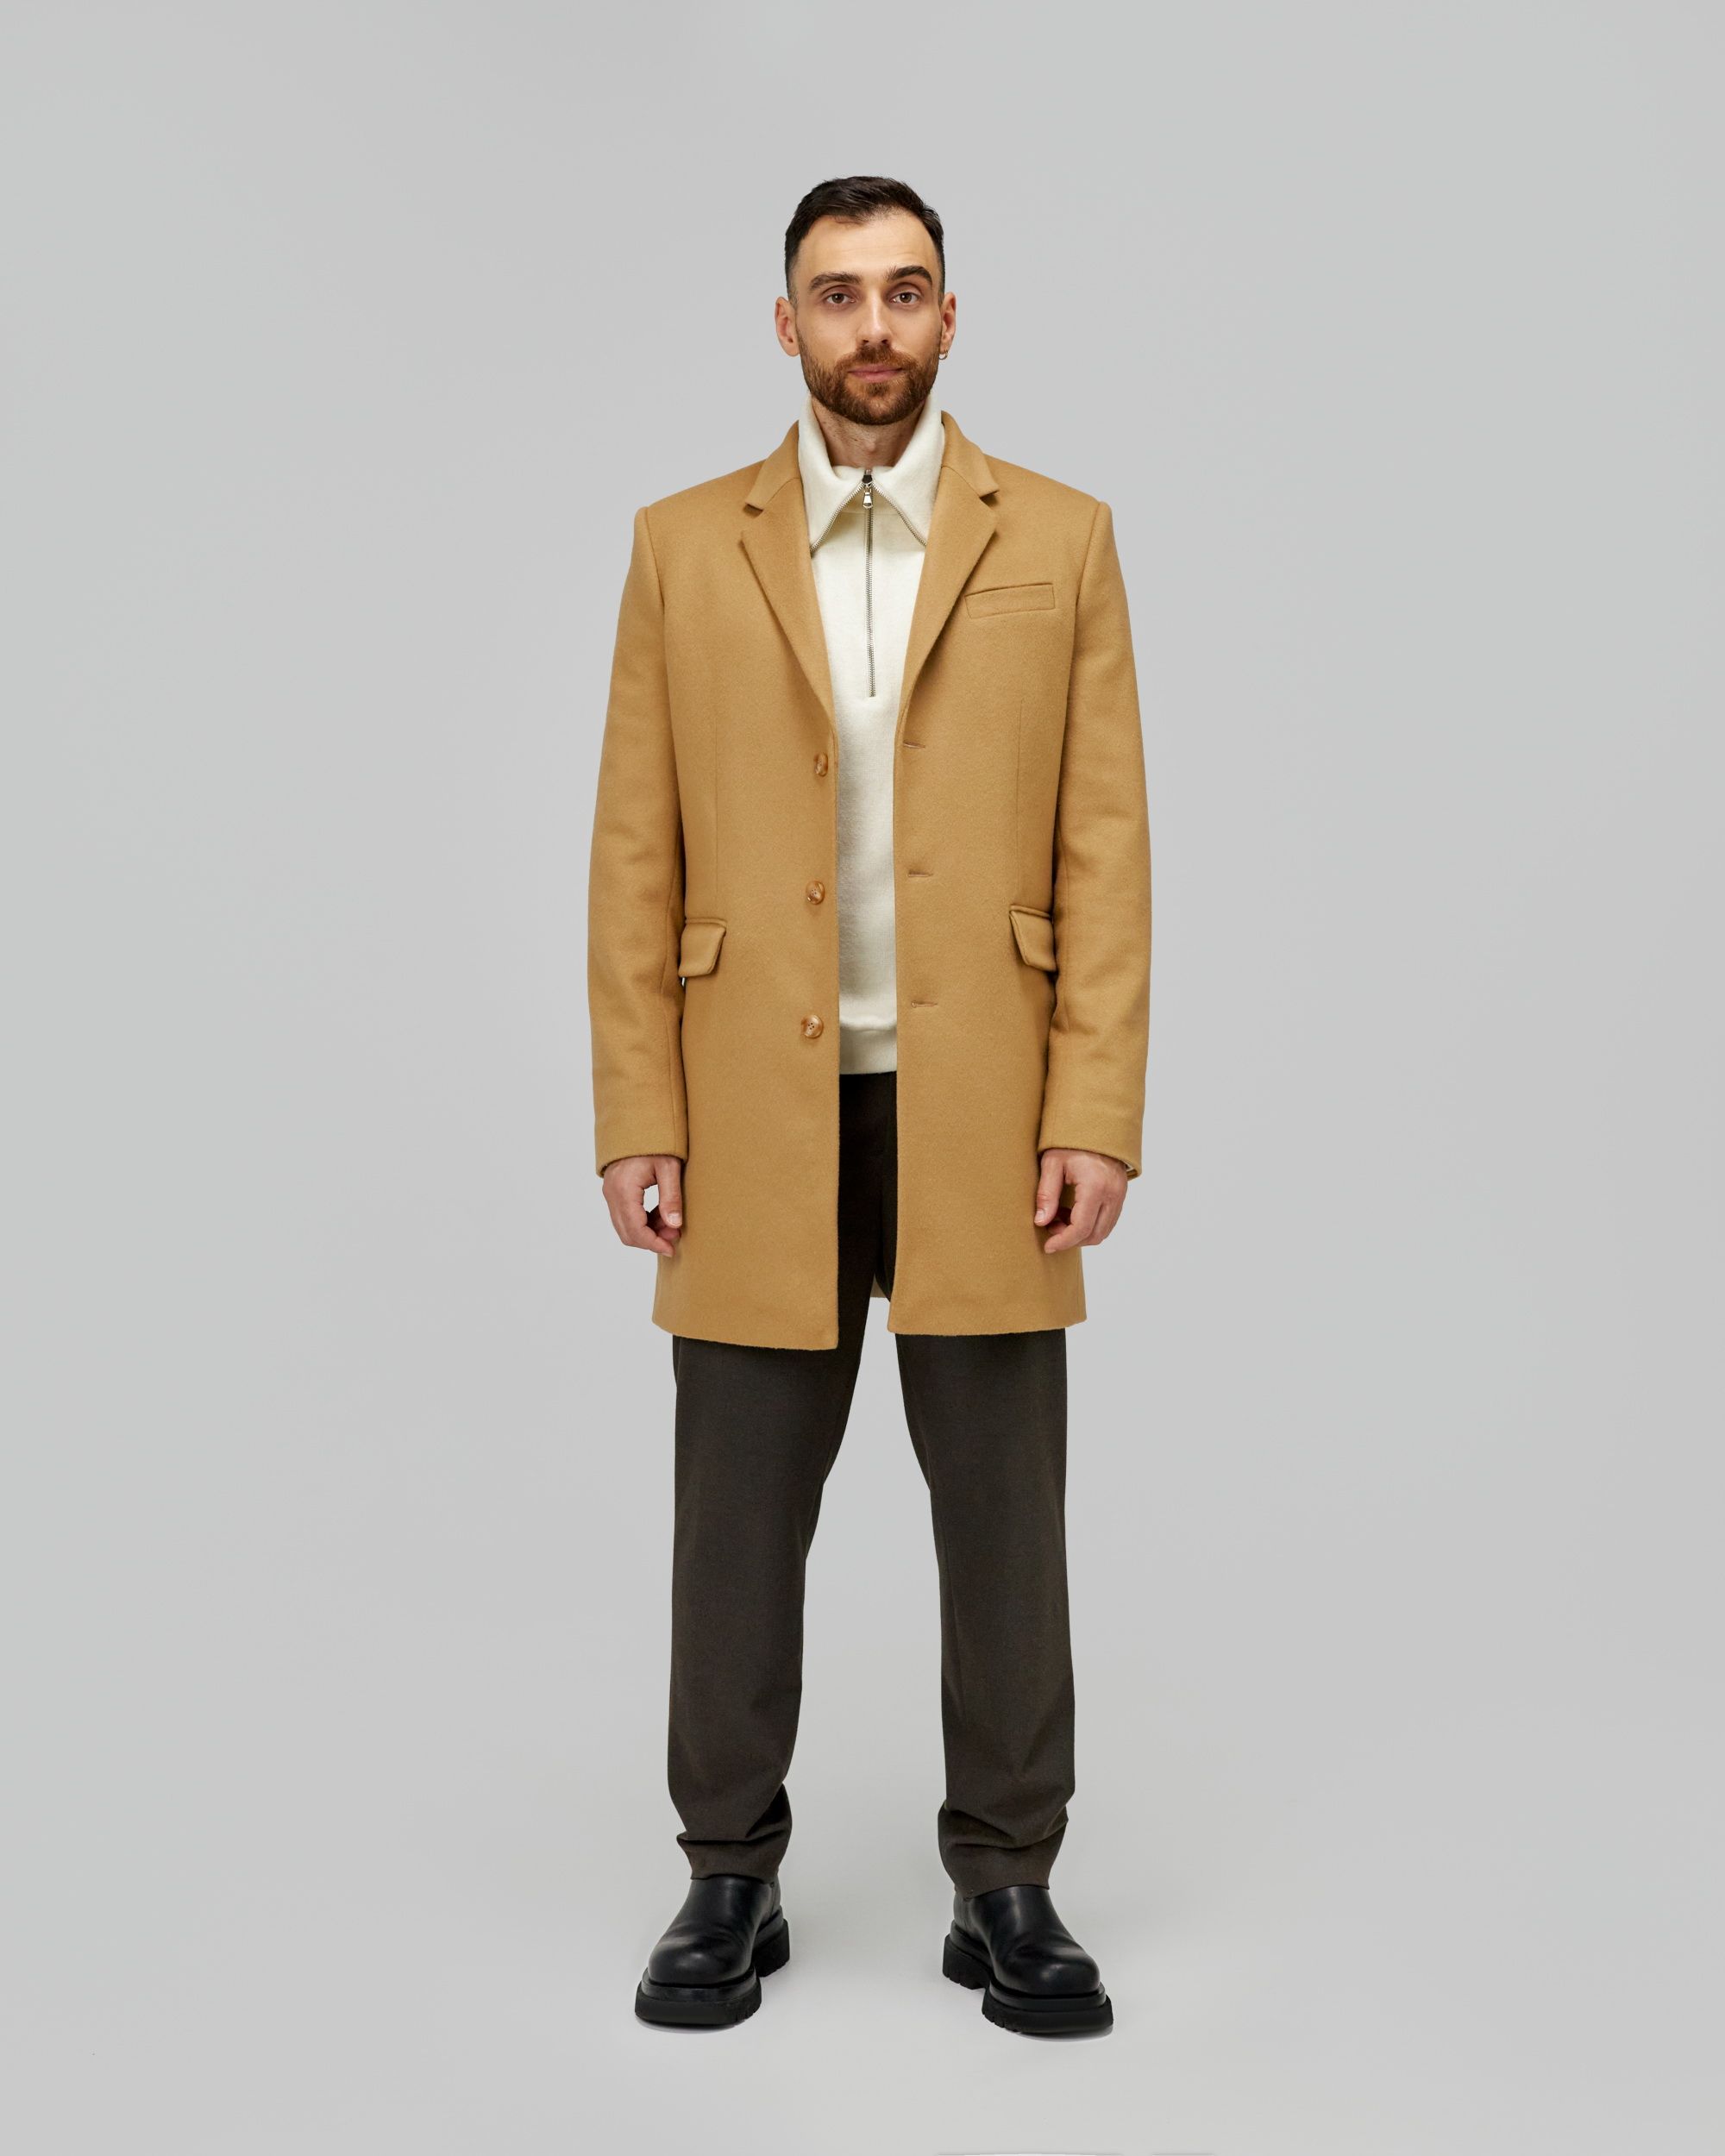 Men's coat, pattern №639 buy on-line